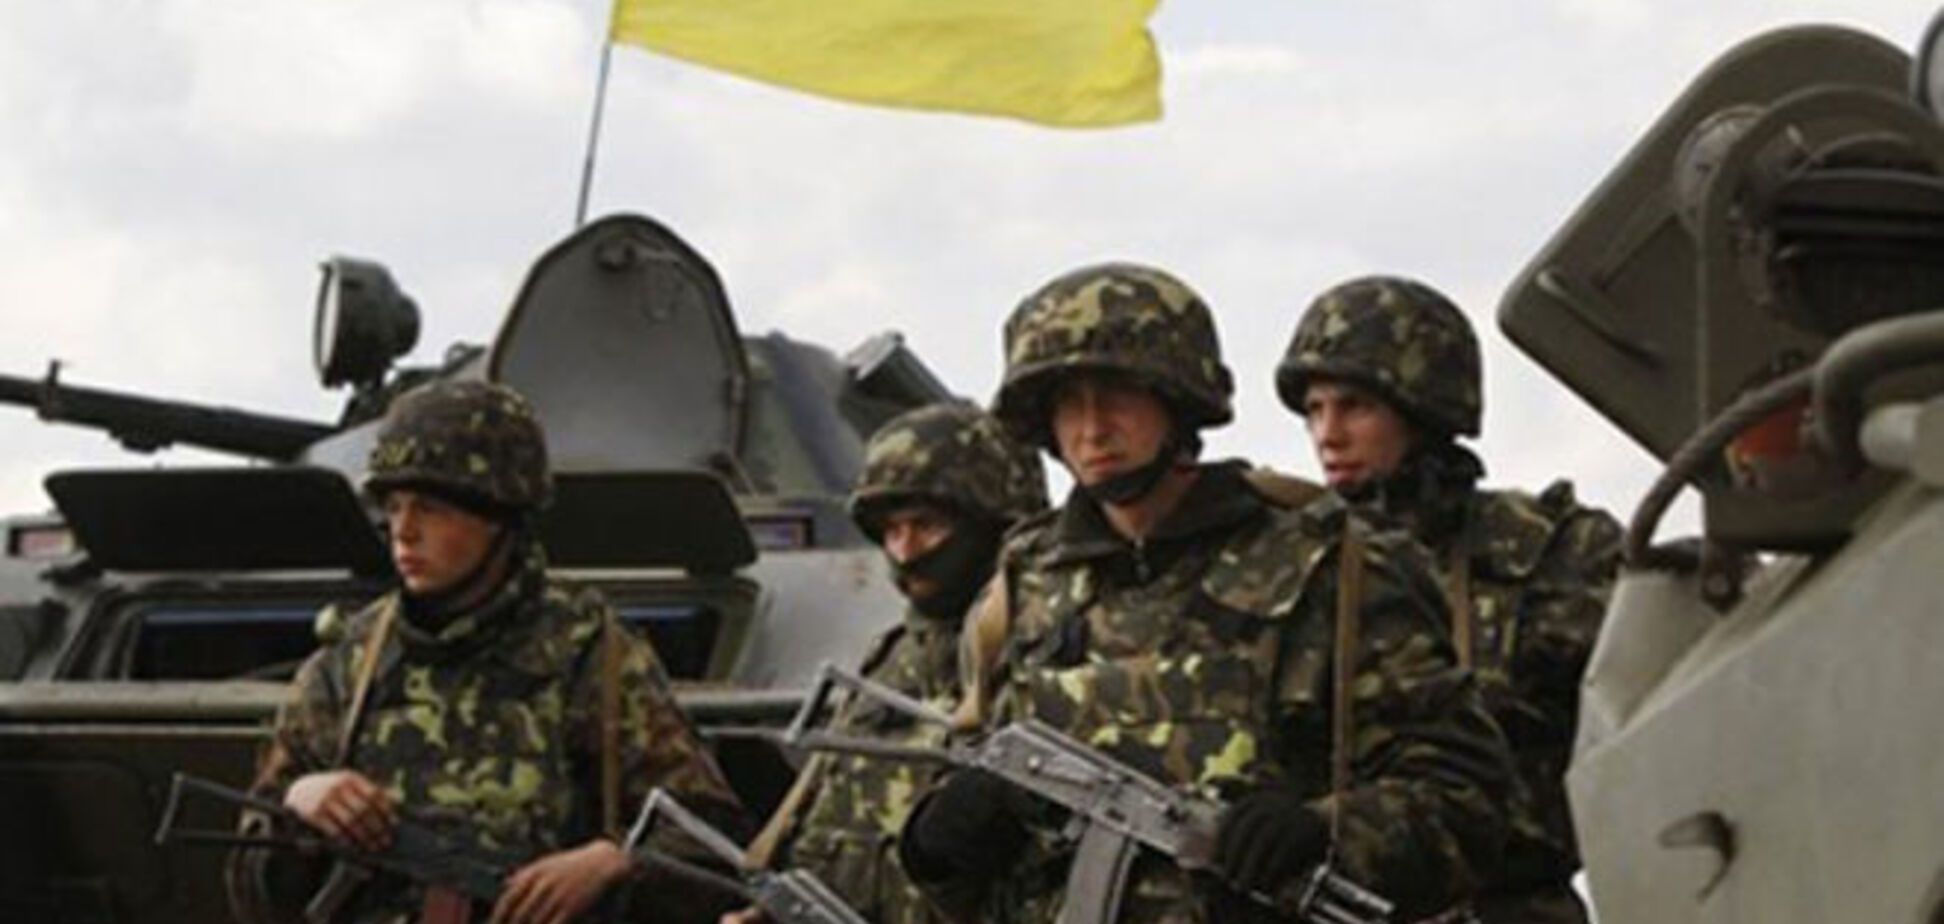 Украинские бойцы за свои подвиги получили более 7 млн гривен - Генштаб